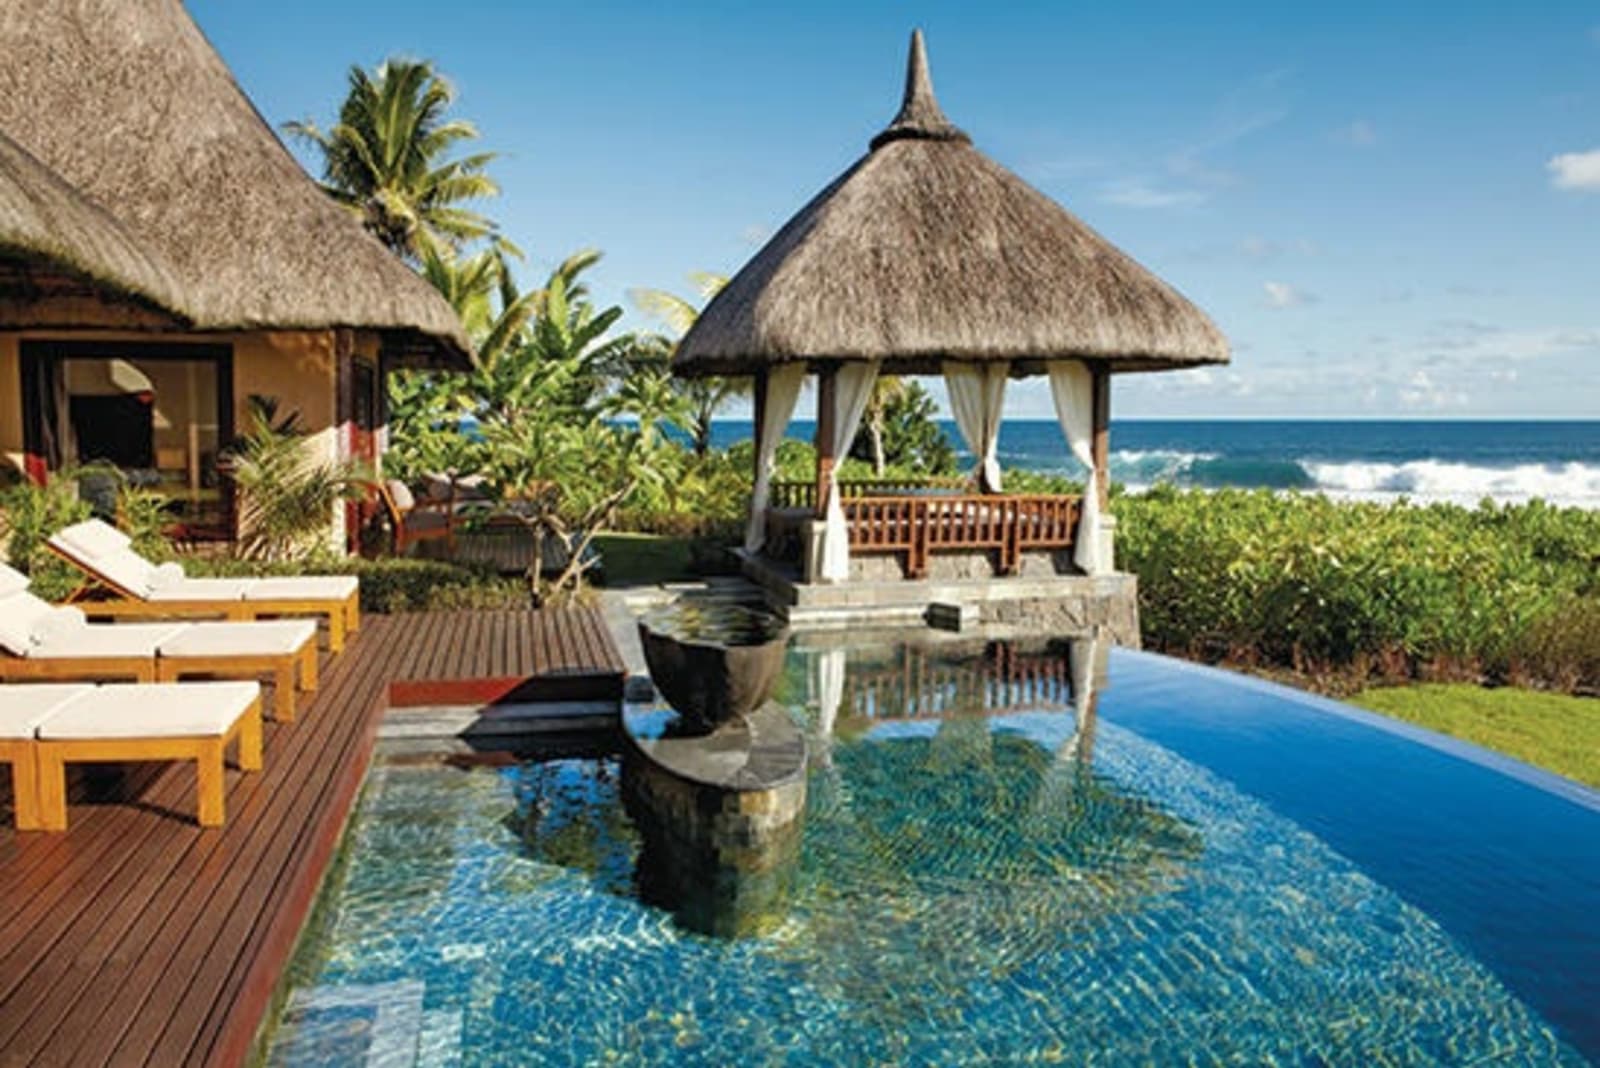 blog-herotwo-bed-villa-pool-terrace-shanti-maurice.jpg